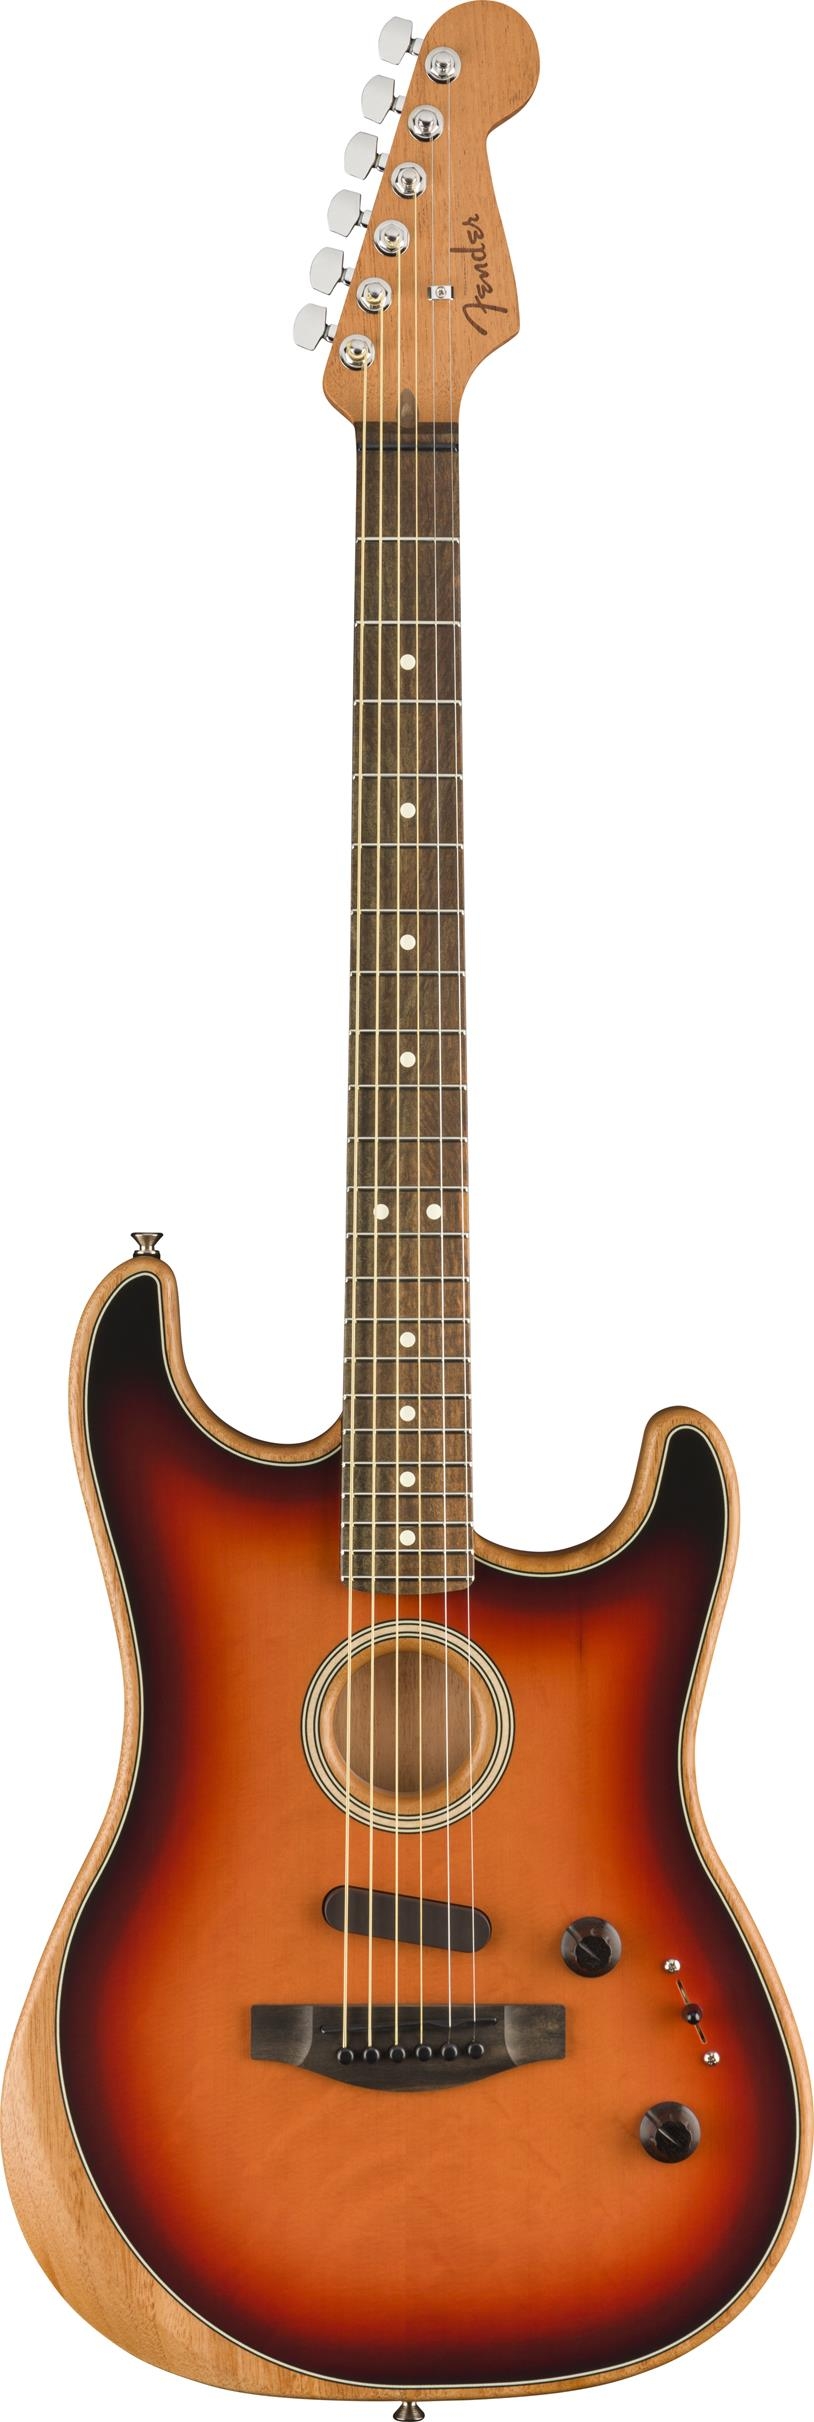 Fender Acoustasonic Strat - Sunburst touche ébène